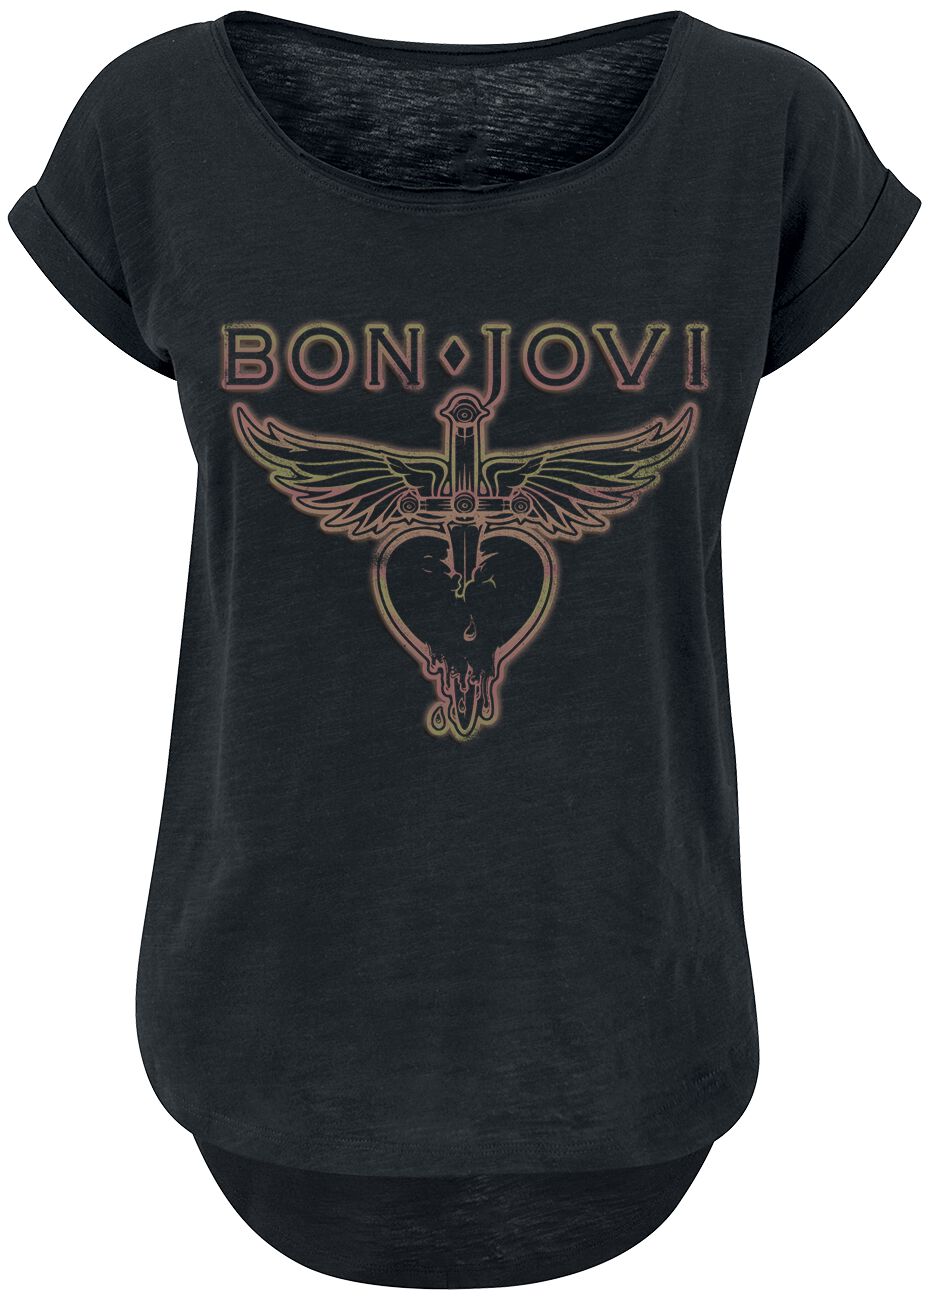 bon jovi t-shirt - heart & dagger outline - s bis 3xl - fÃ¼r damen - grÃ¶ÃŸe 3xl - - lizenziertes merchandise! schwarz donna